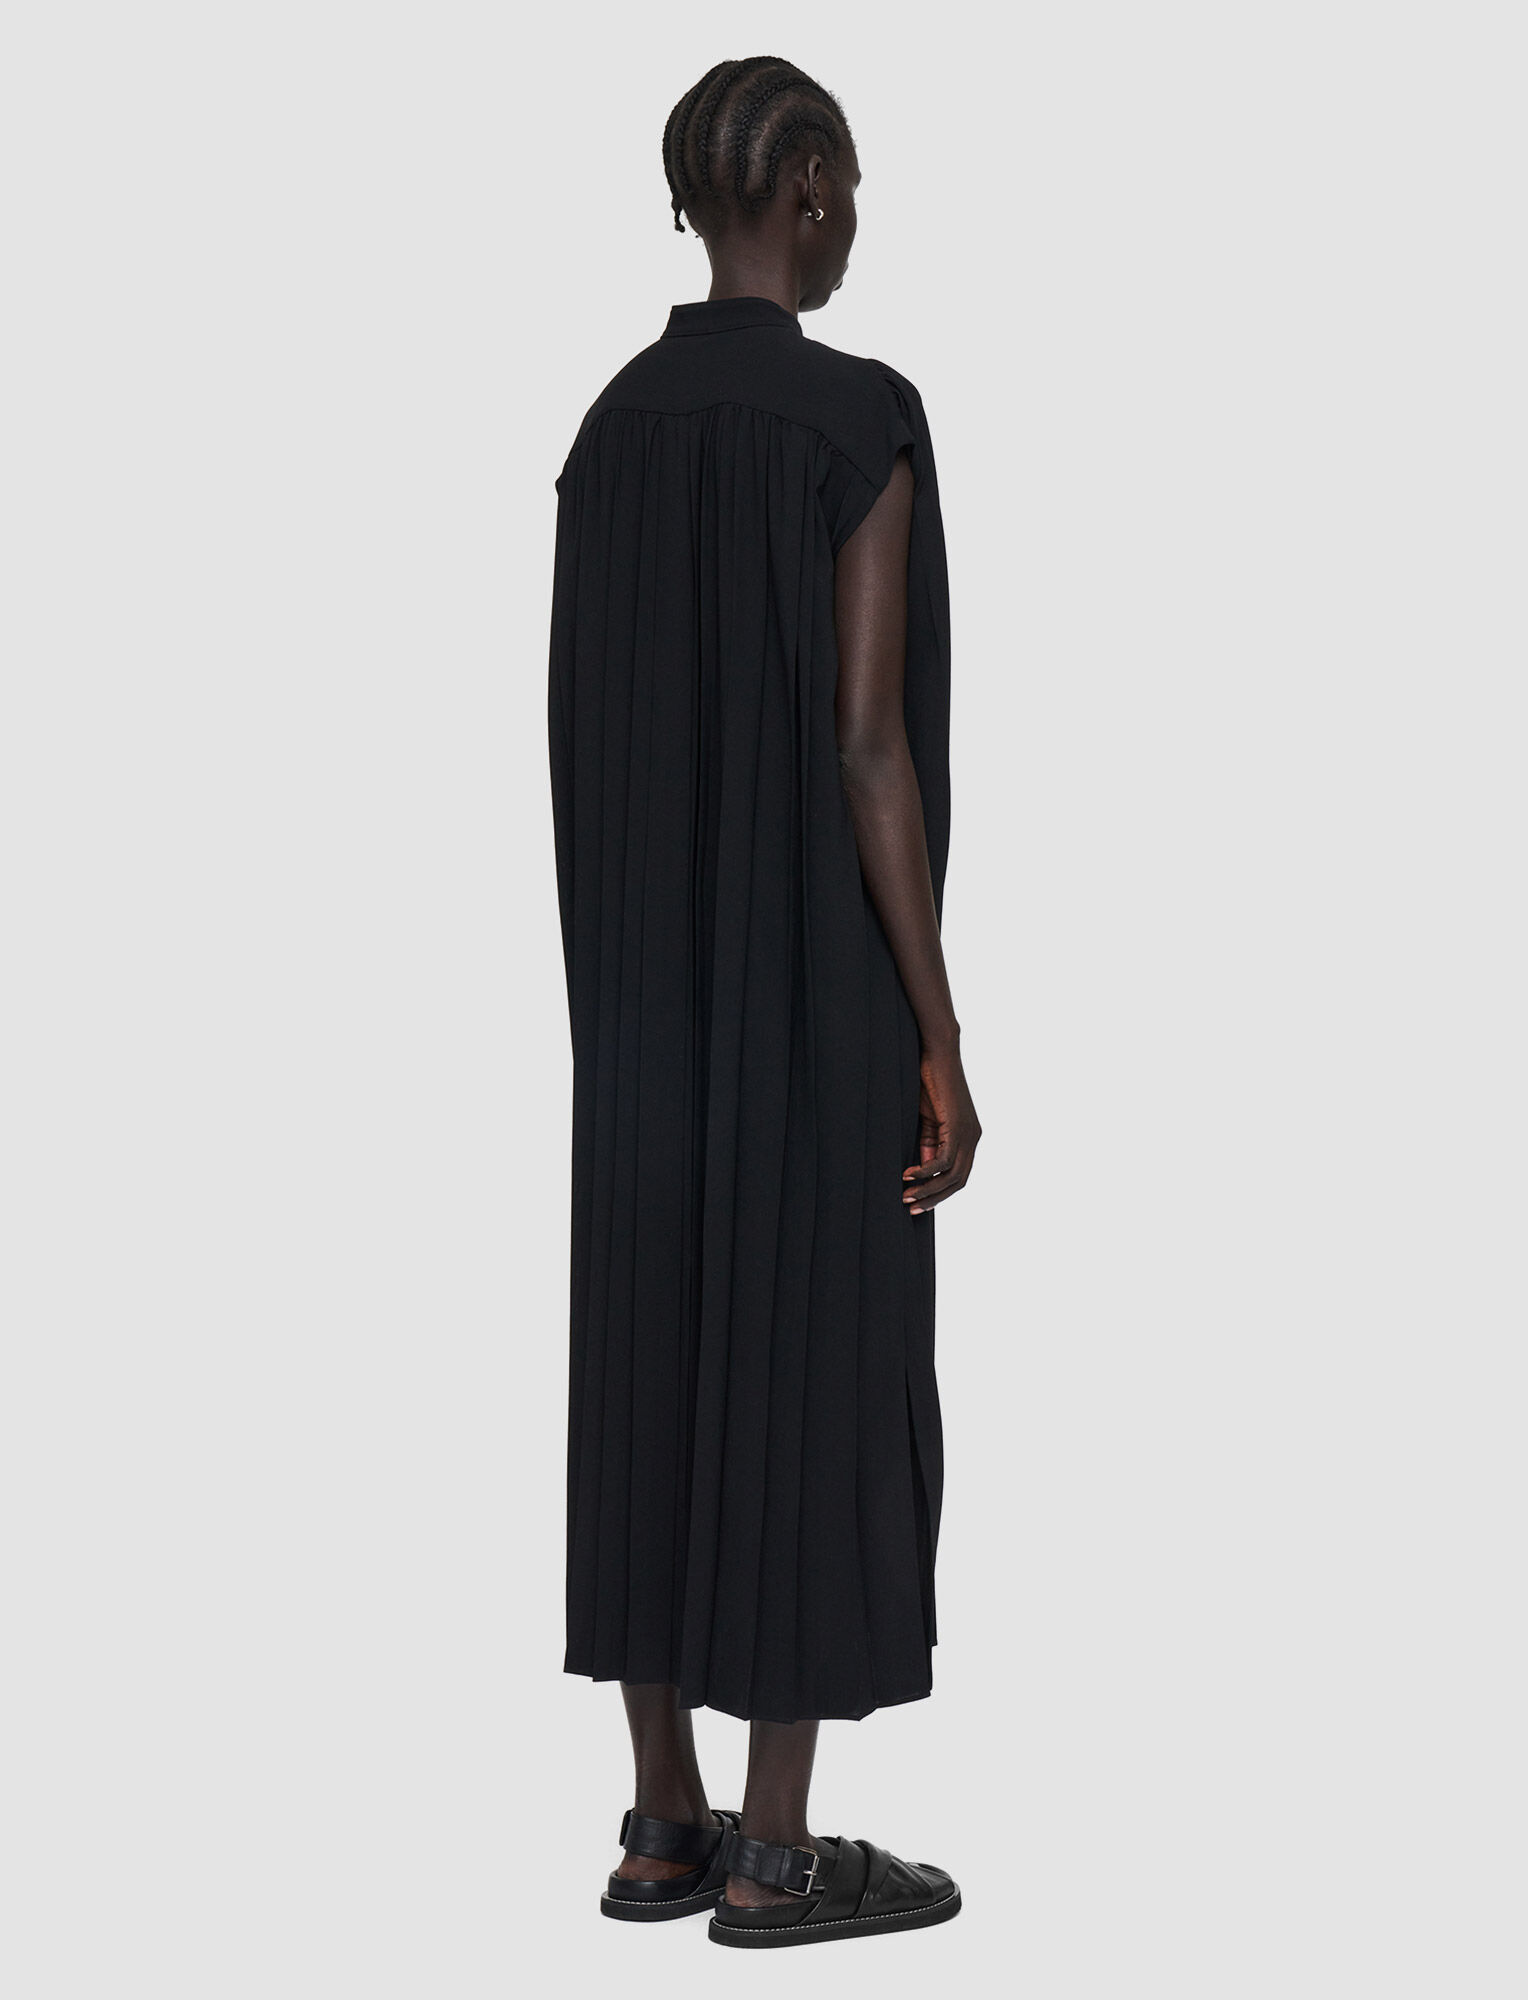 Joseph, Airy Plissé Davidge Dress, in Black